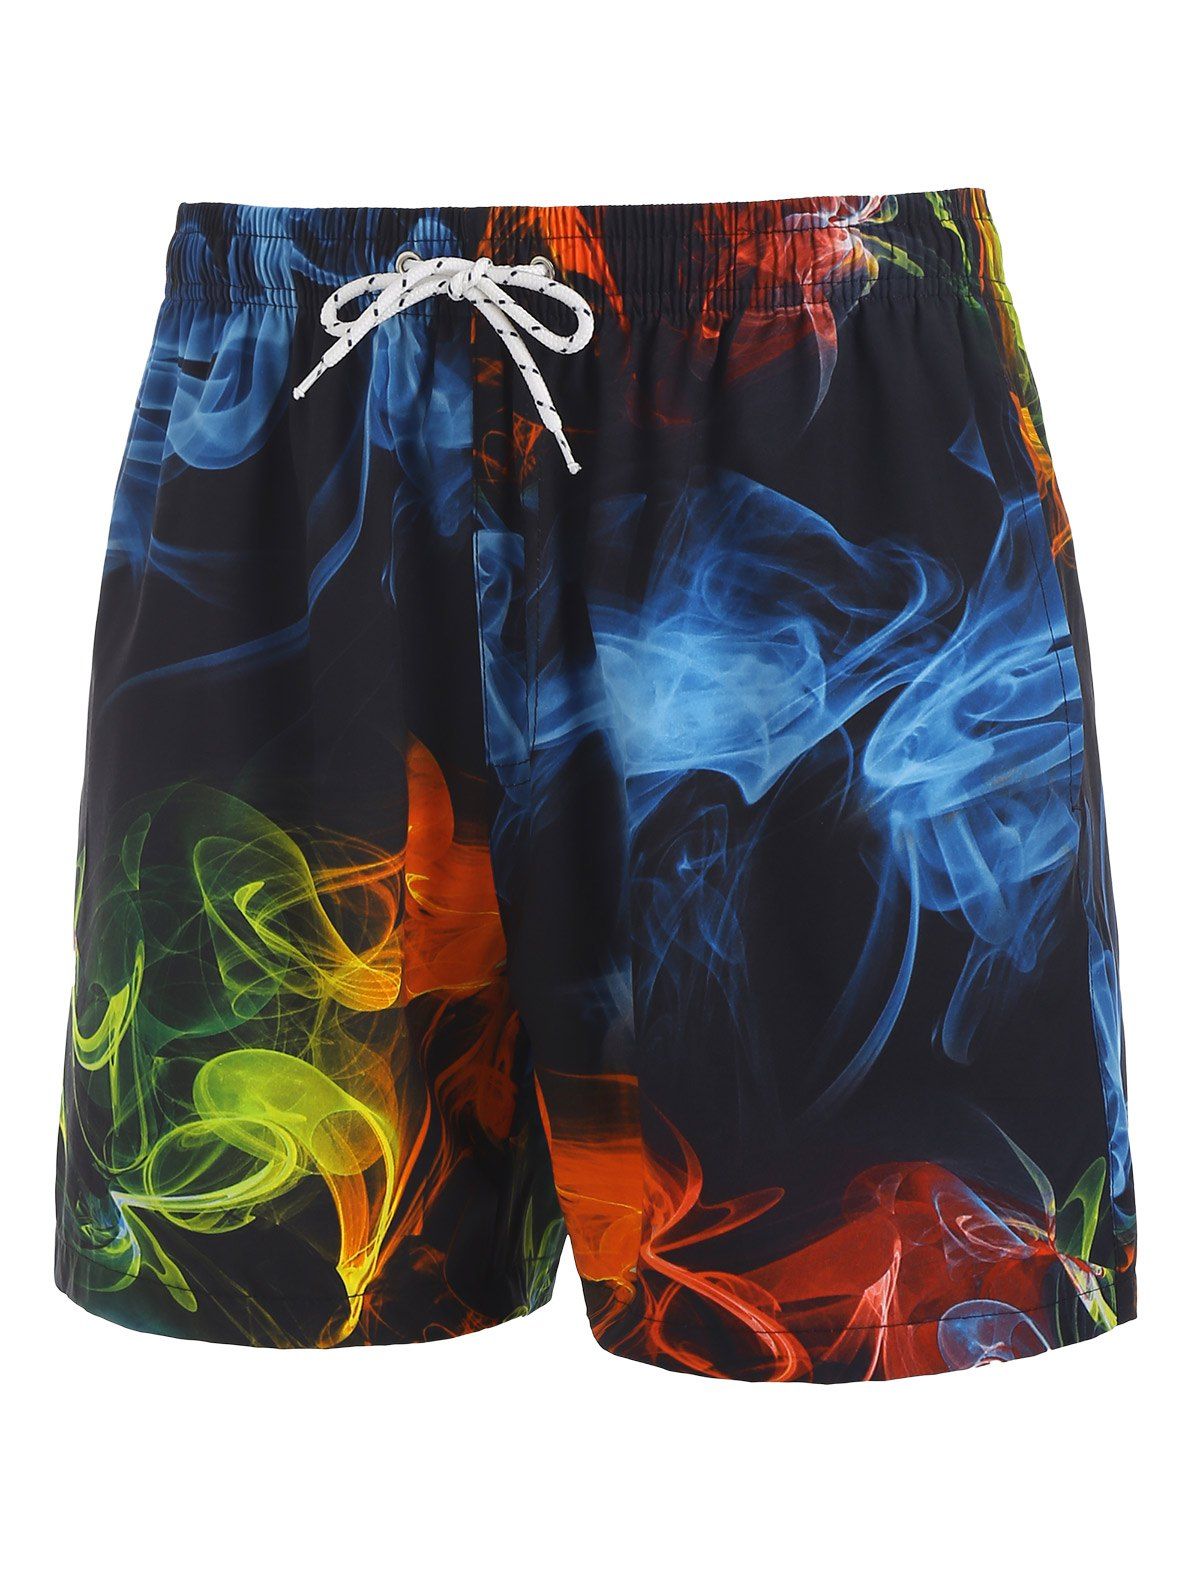 Ombre Drawstring Pocket Board Shorts - multicolor L